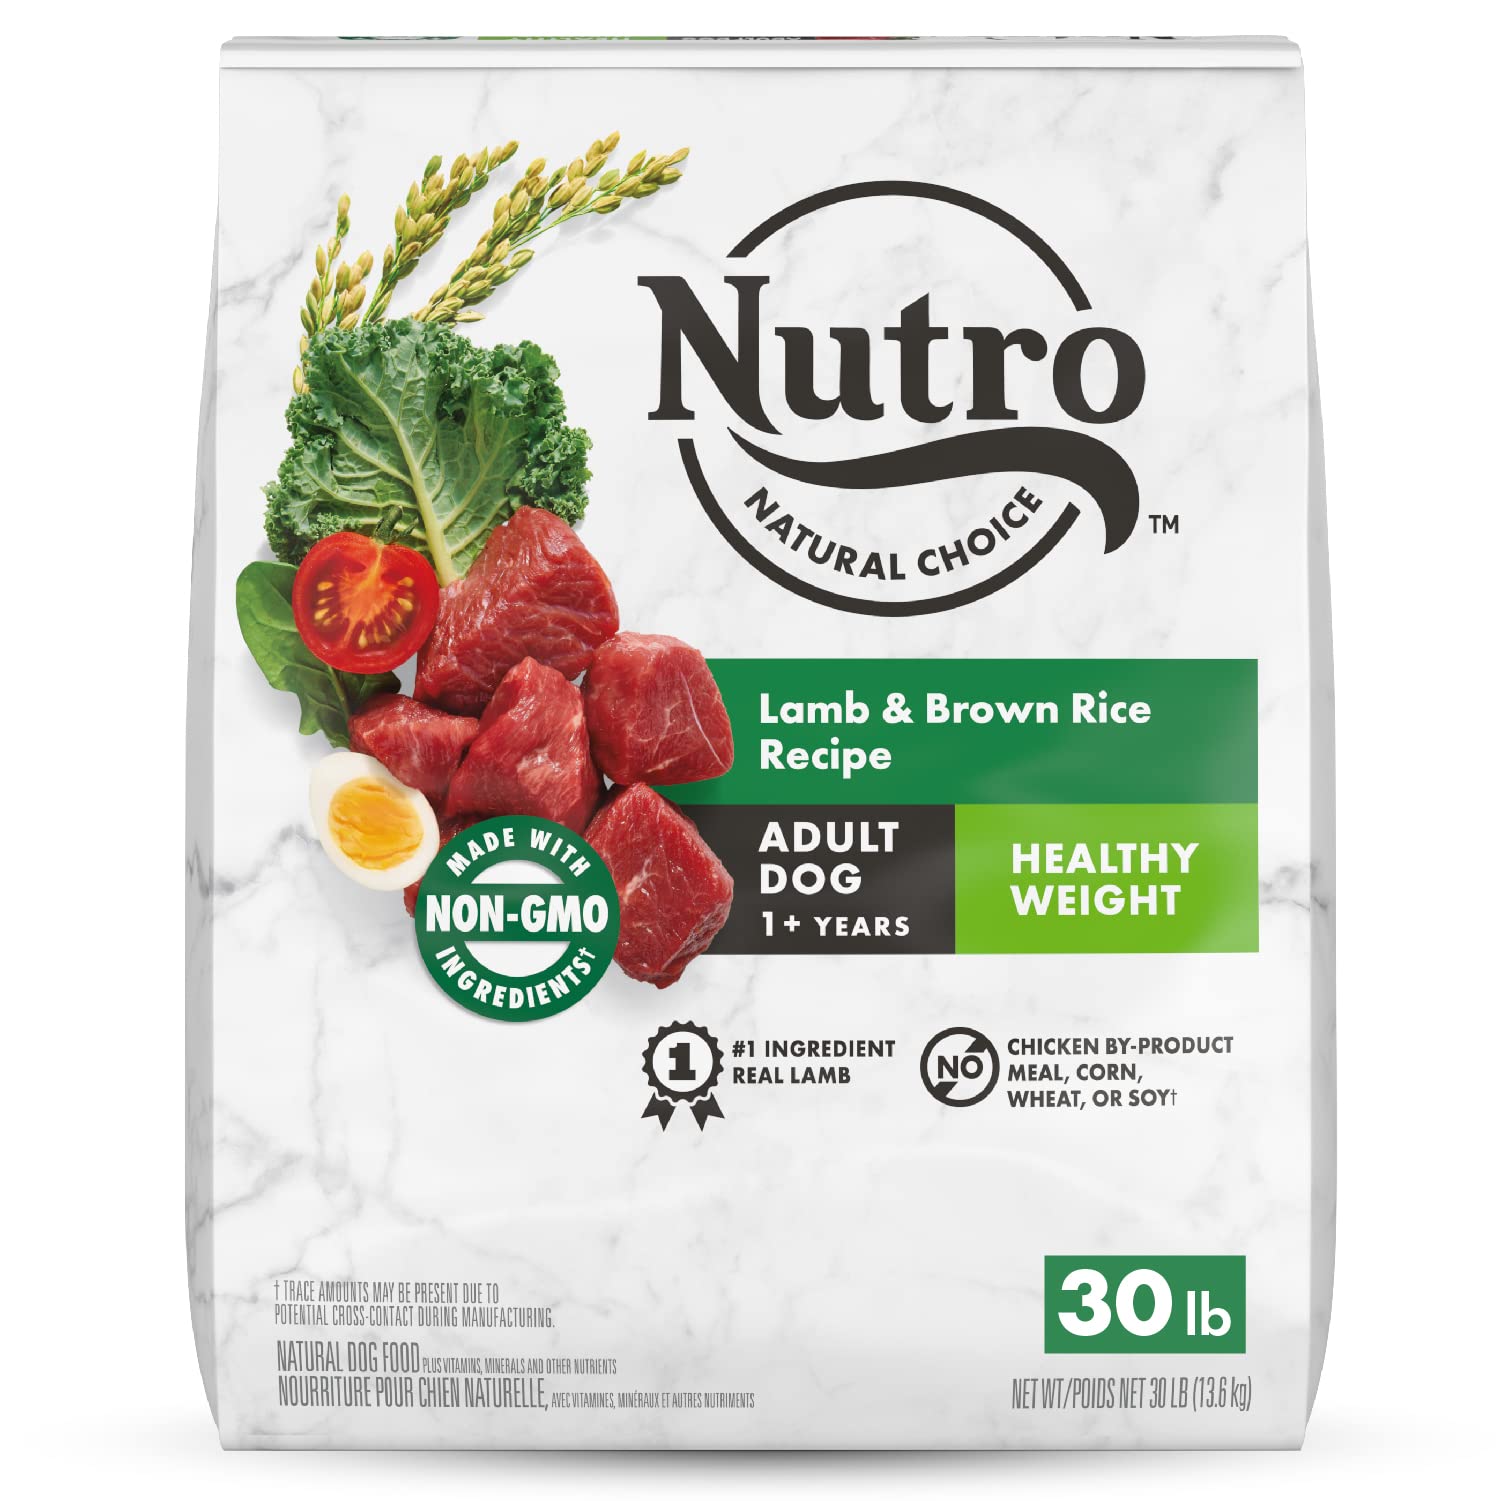 Nutro NATURAL CHOICE Healthy Weight Adult Dry Dog Food, Lamb & Brown Rice Recipe Dog Kibble, 30 lb. Bag